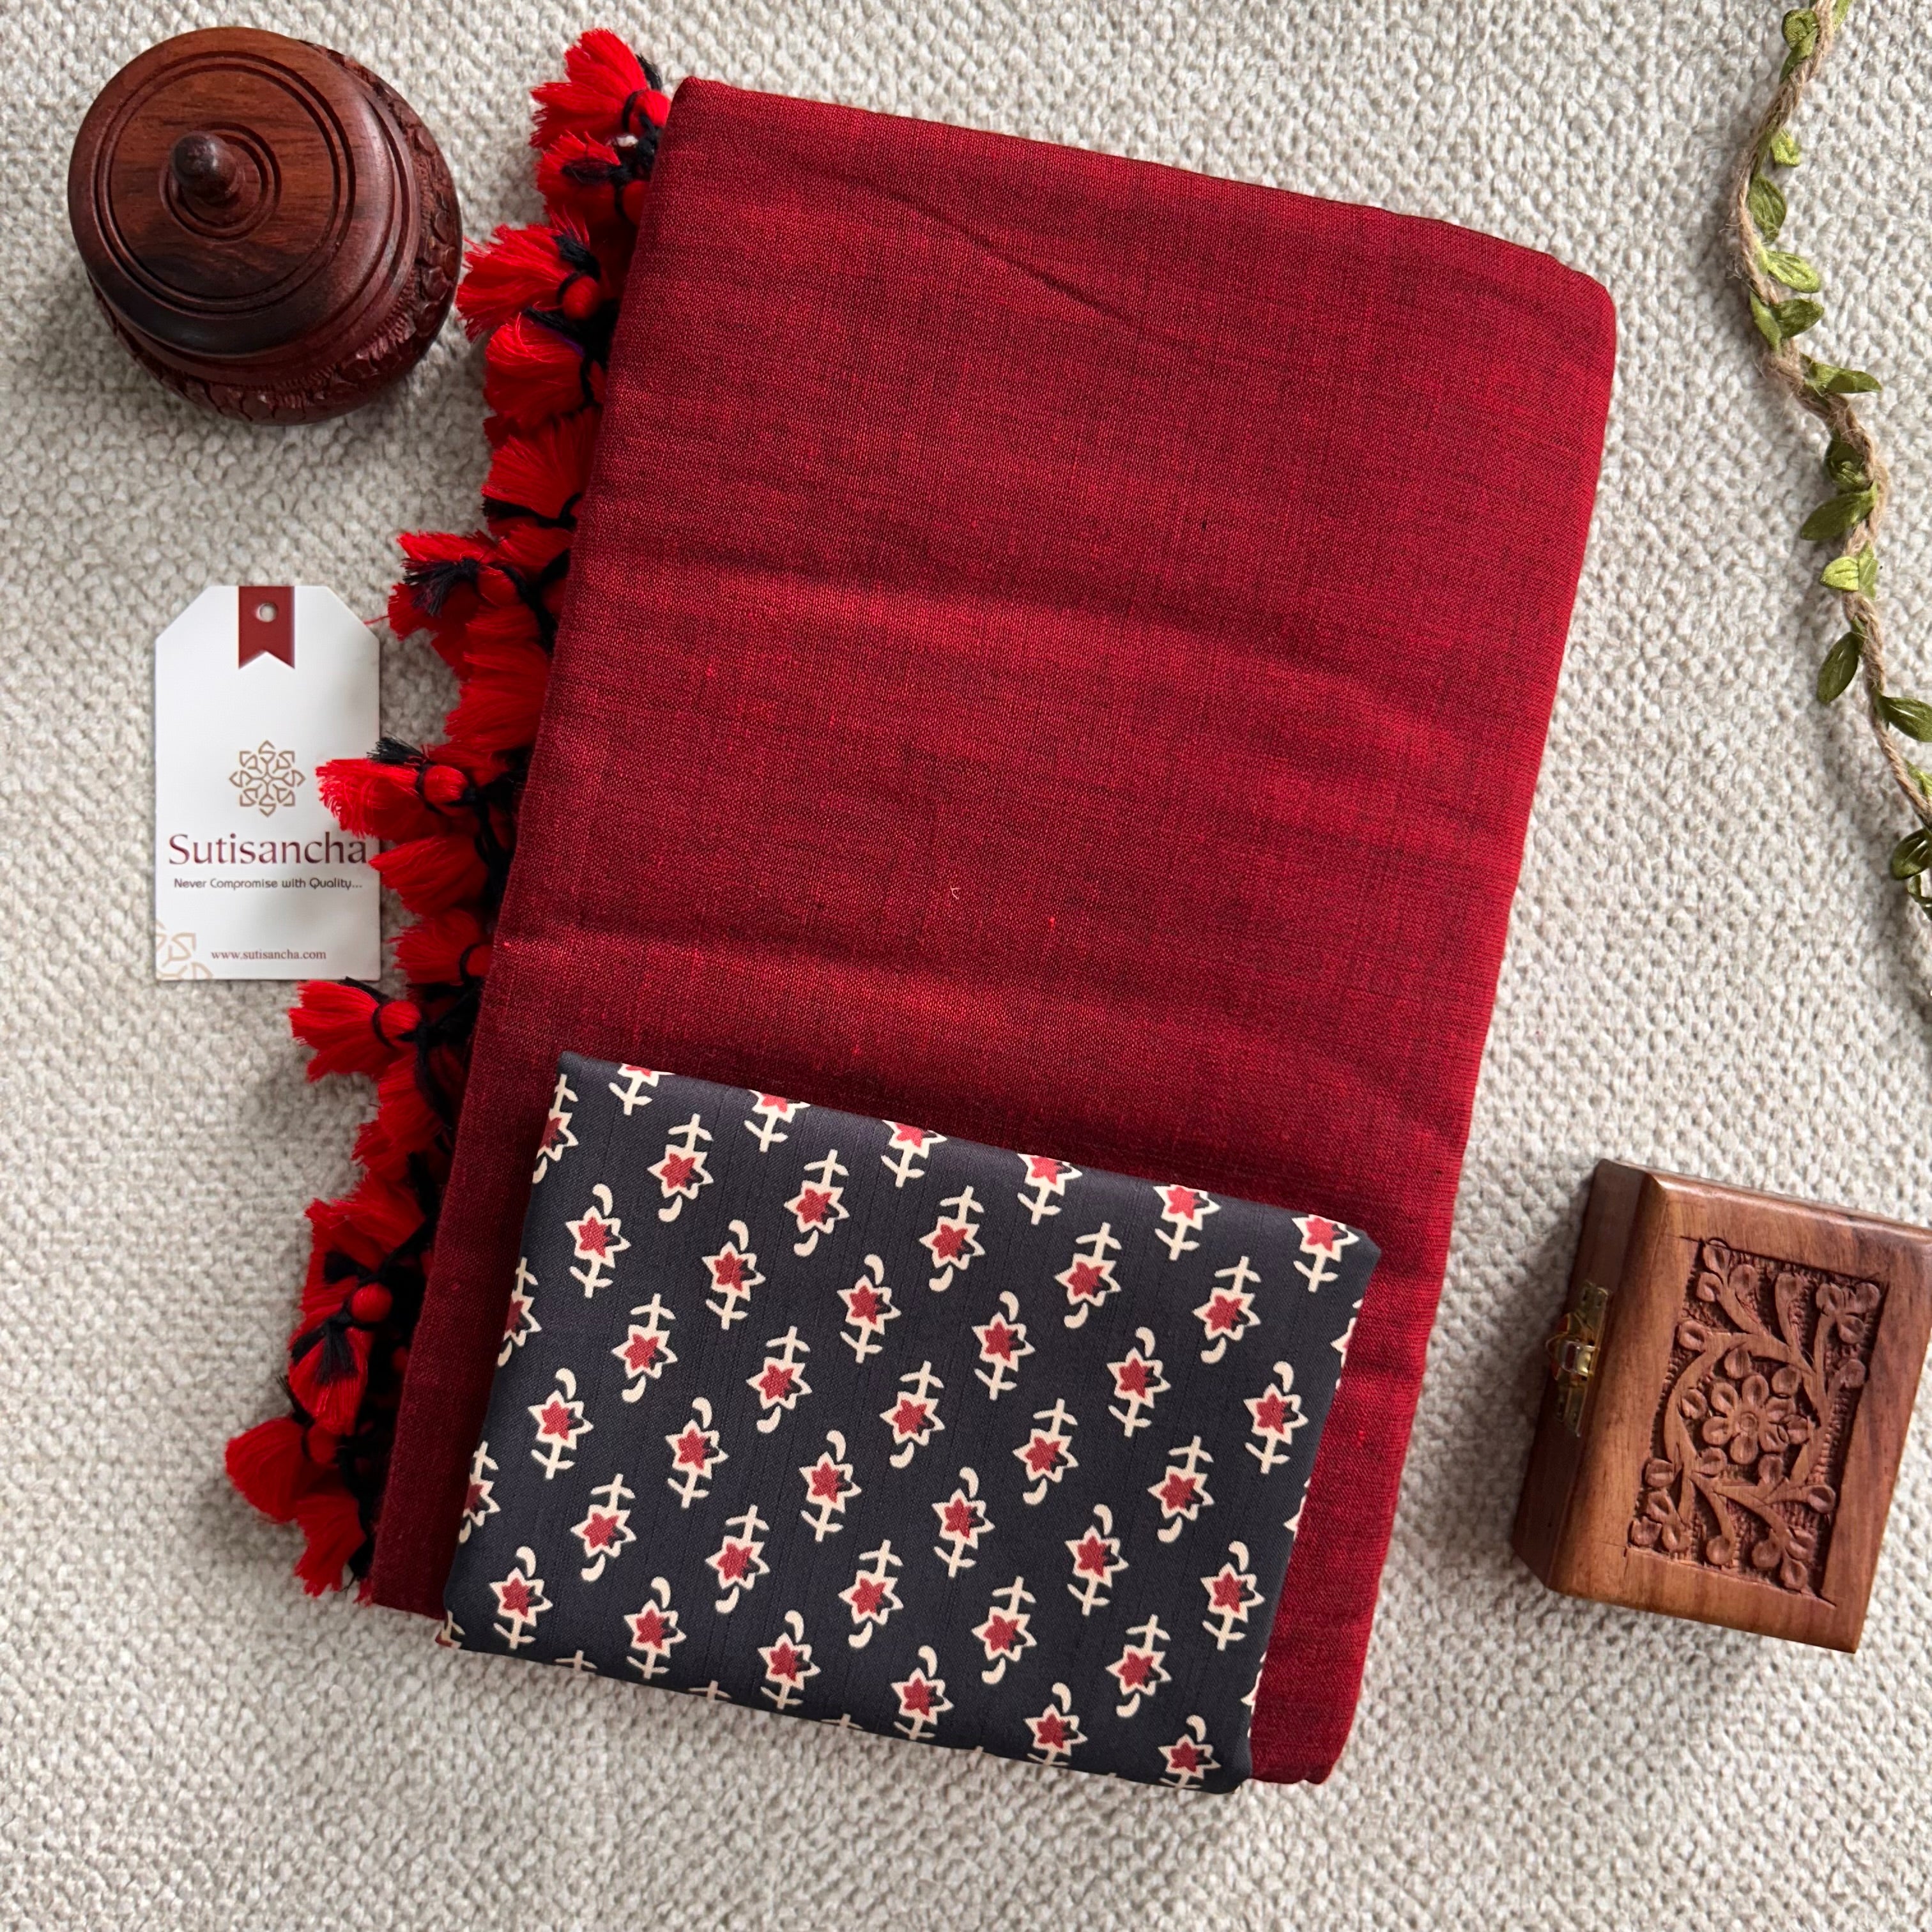 Sutisancha Cherry Red Handloom Cotton Saree & Black Blouse